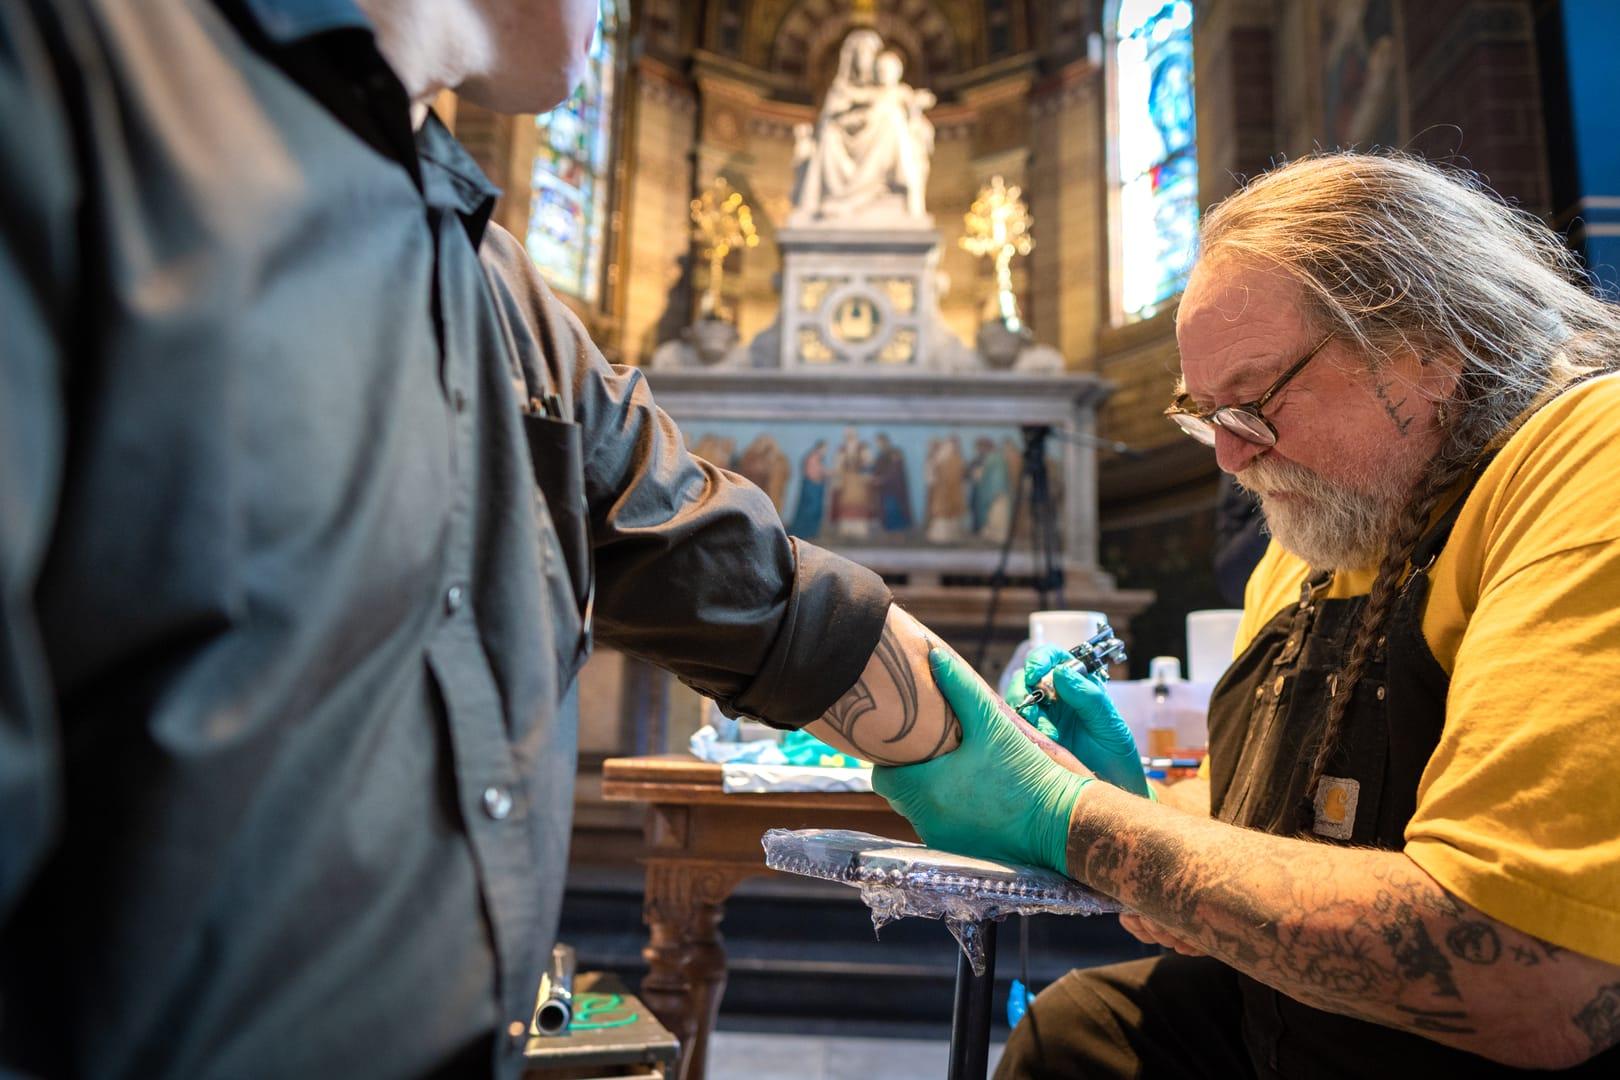 Dutch tattoo artist uses Amsterdam basilica for latest work